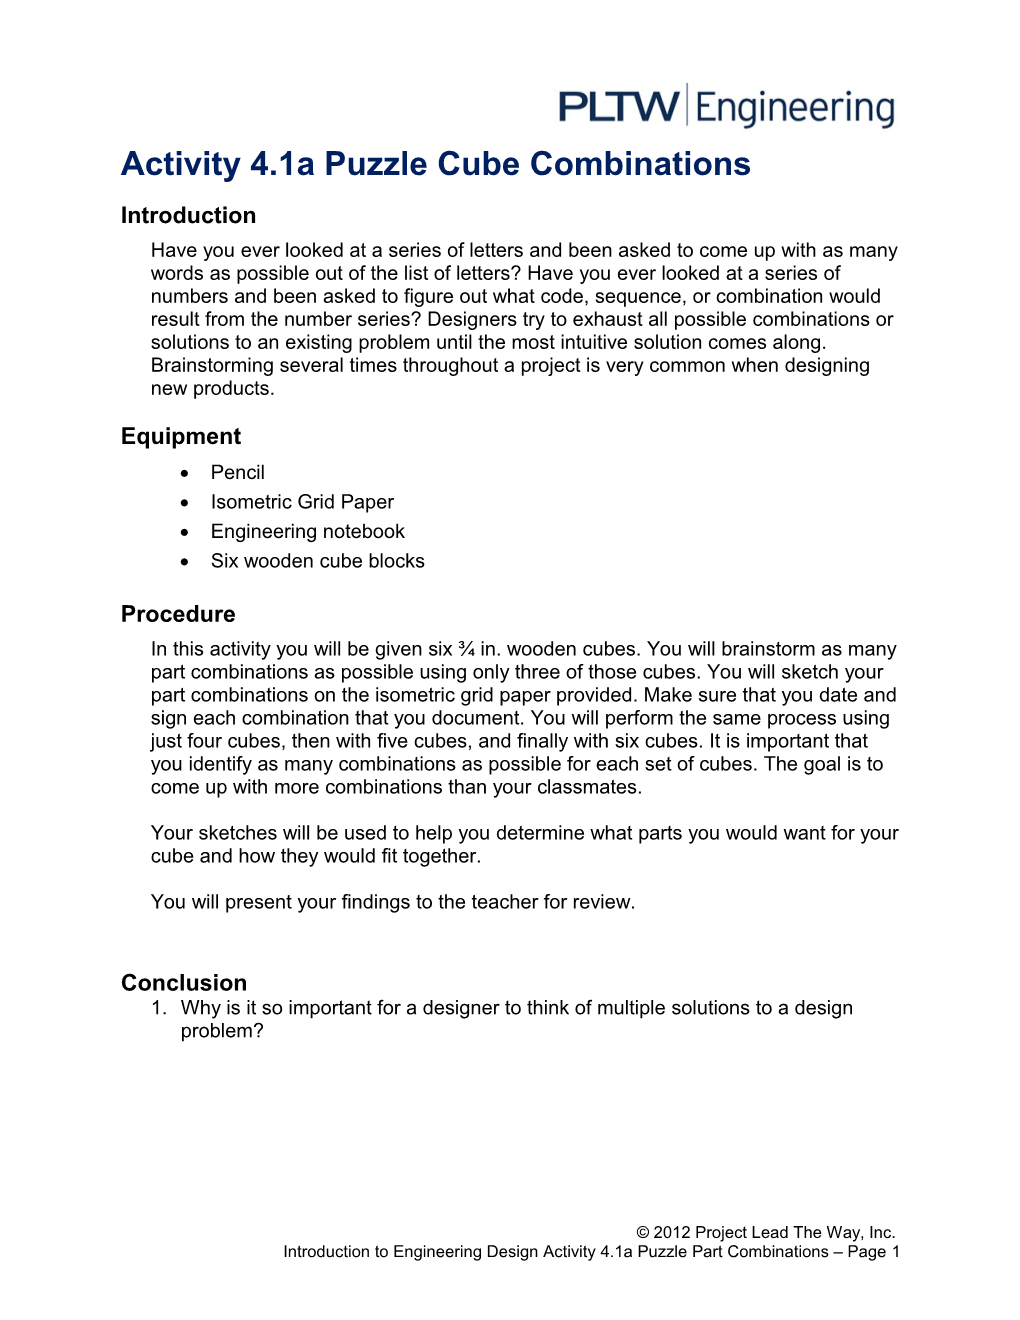 Activity 4.1A Puzzle Cube Combinations